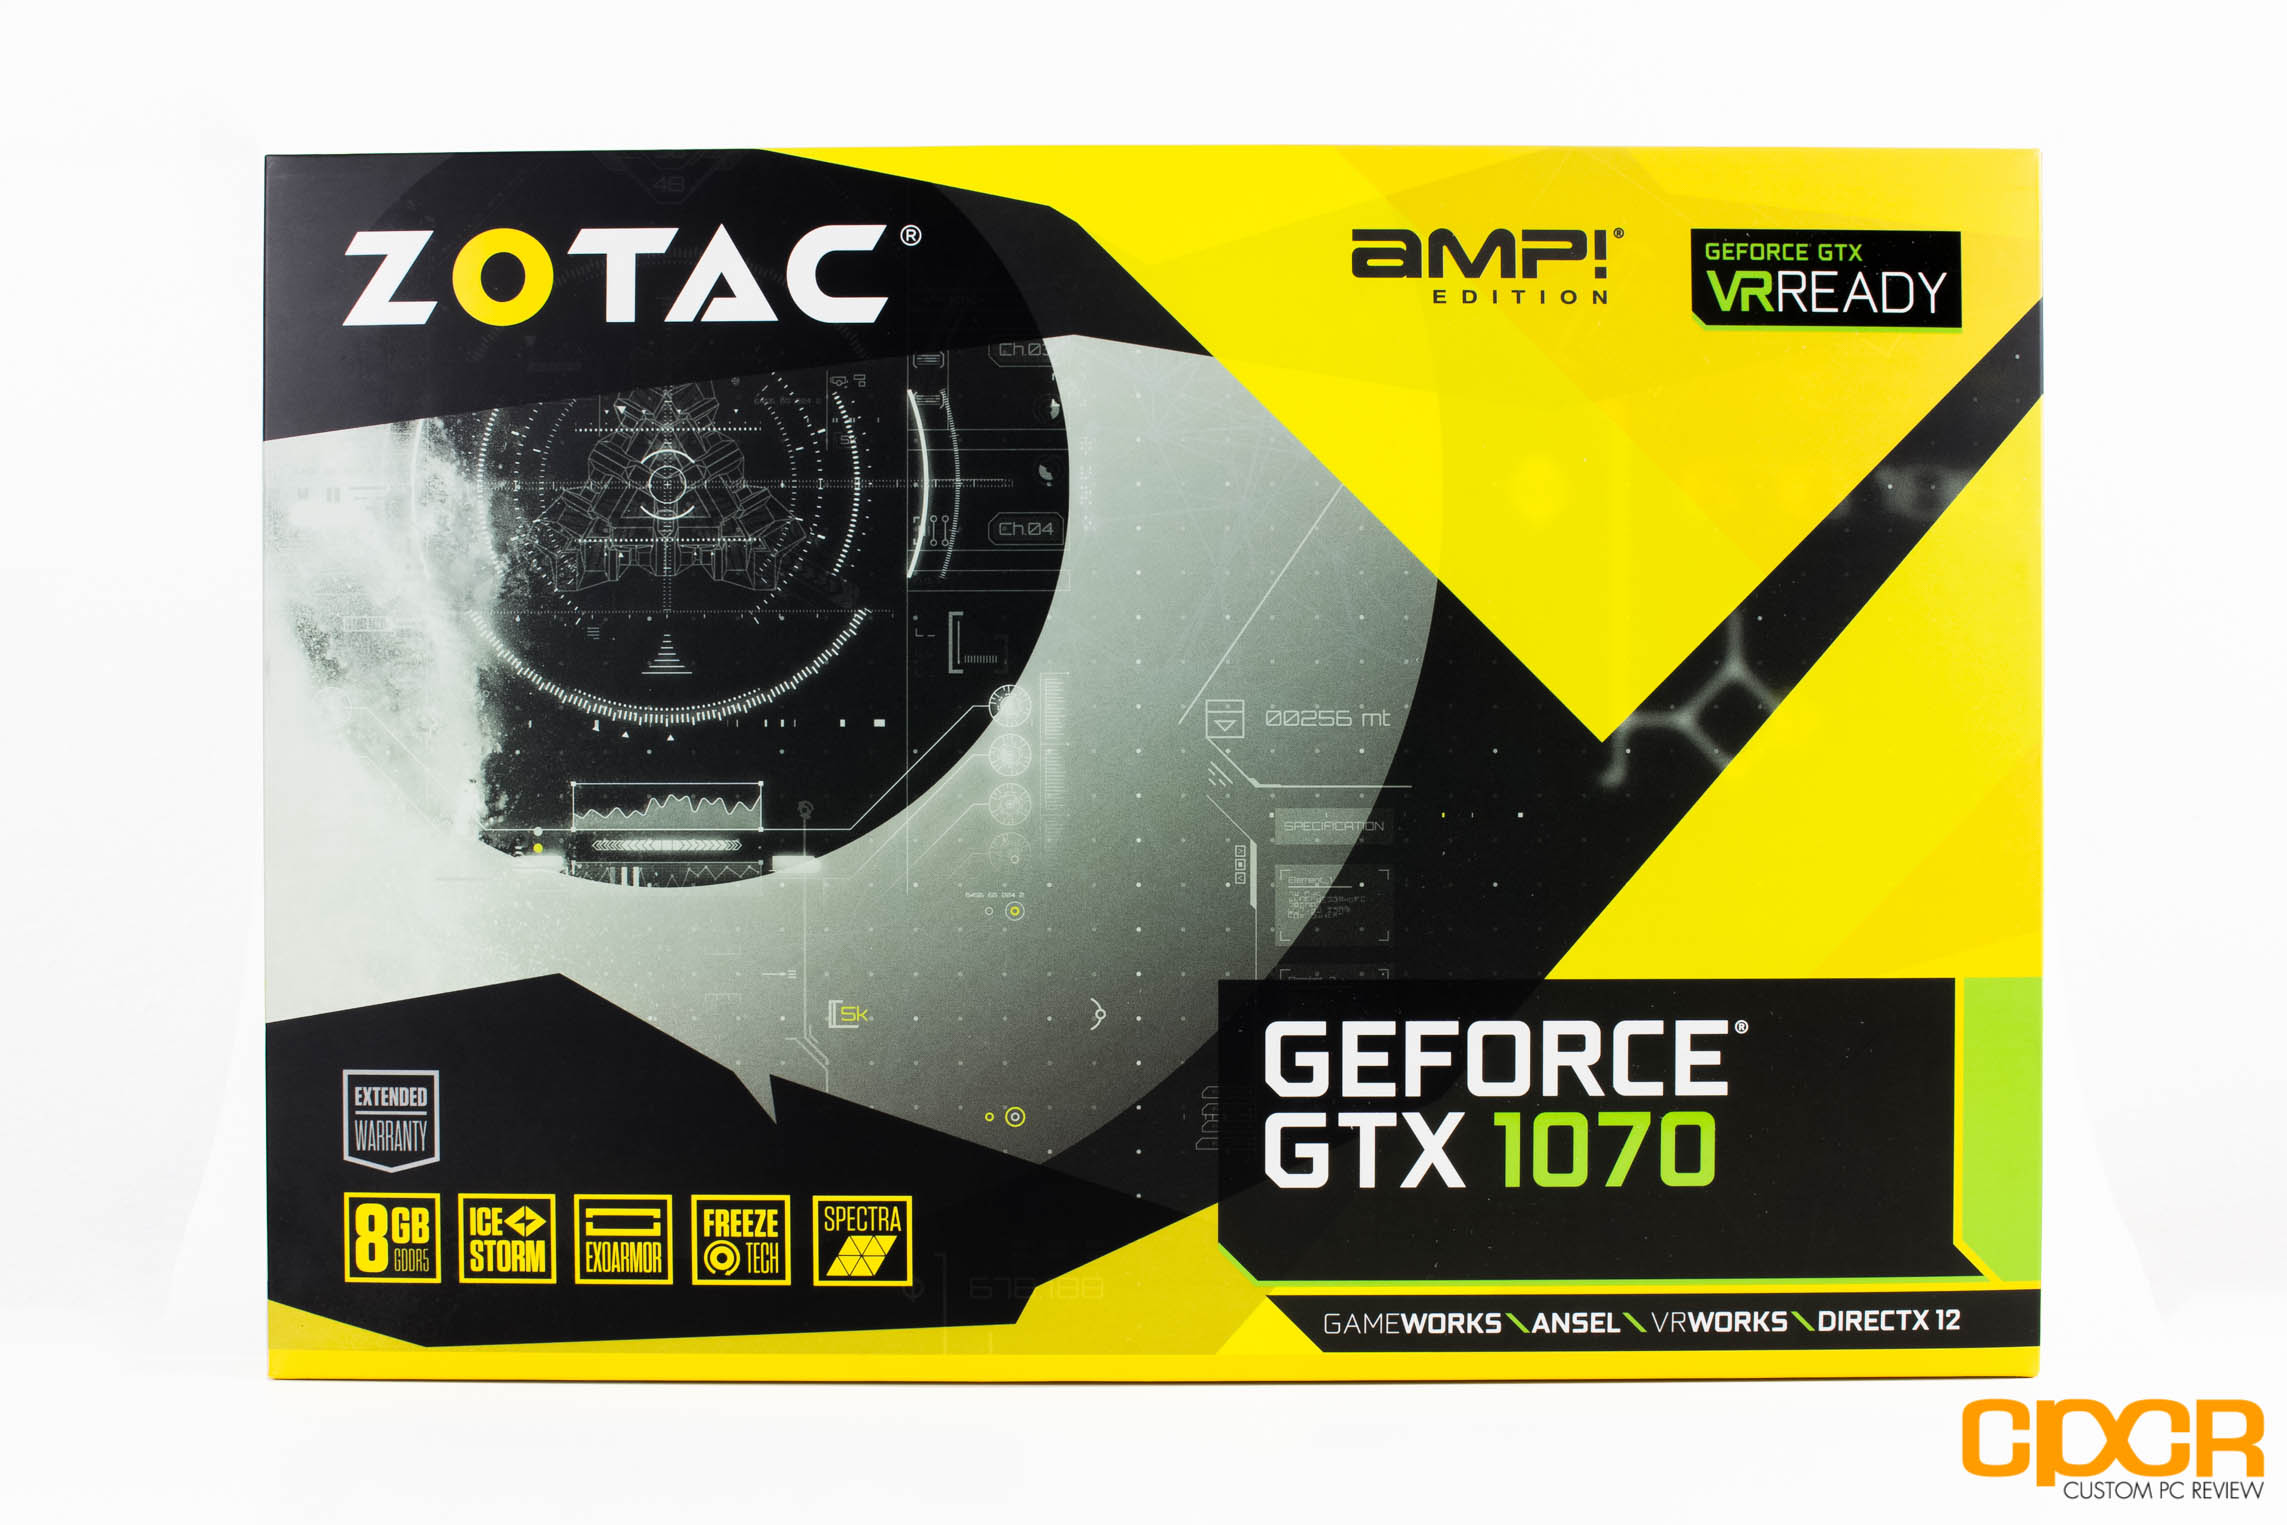 ZOTAC GeForce GTX 1070 AMP! Review - Custom PC Review